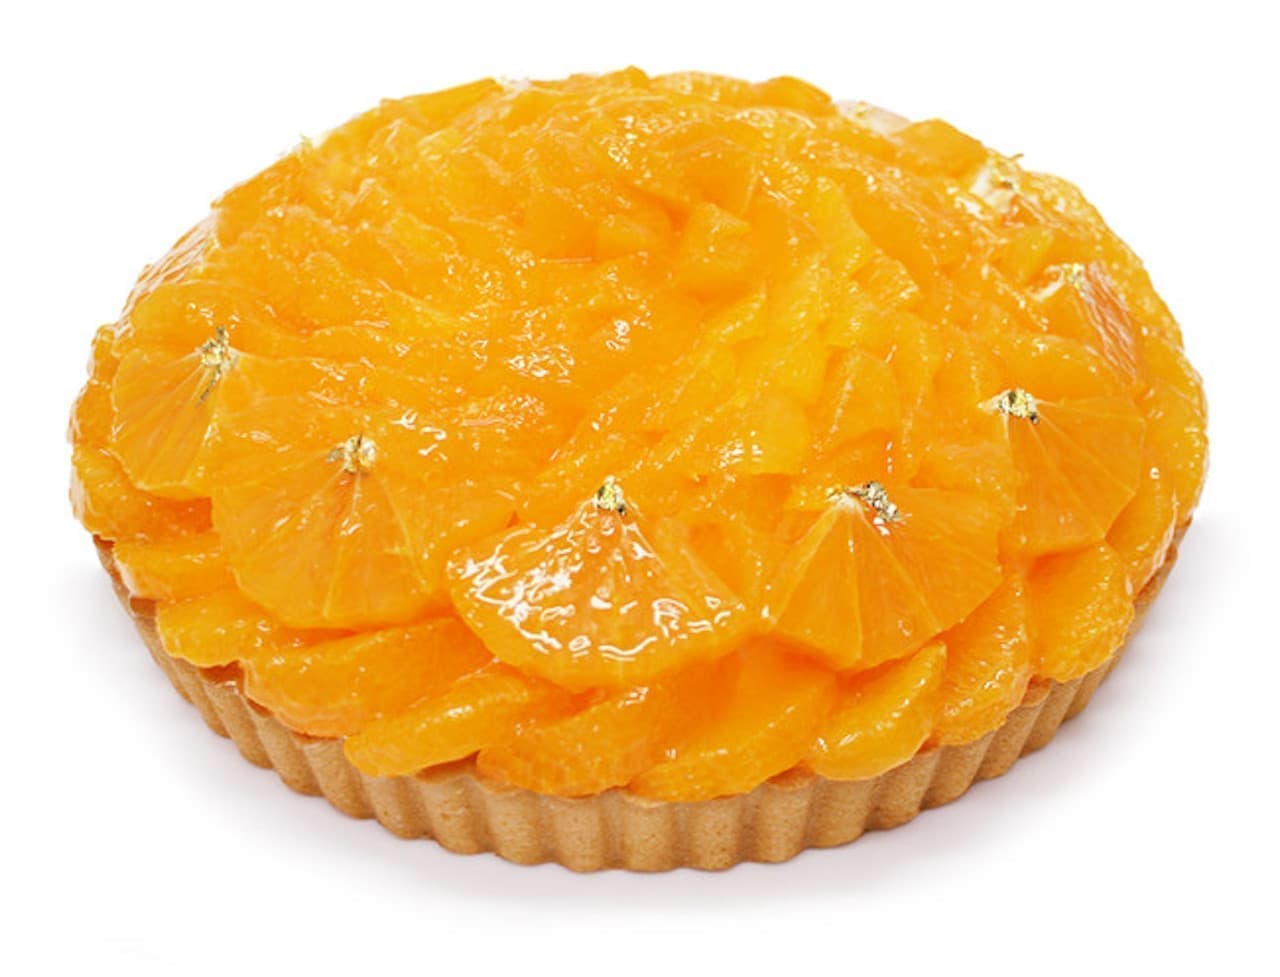 Cafe Comsa "Cake of" Kiyomi Orange "from Nishitani Farm, Uwajima, Ehime Prefecture"